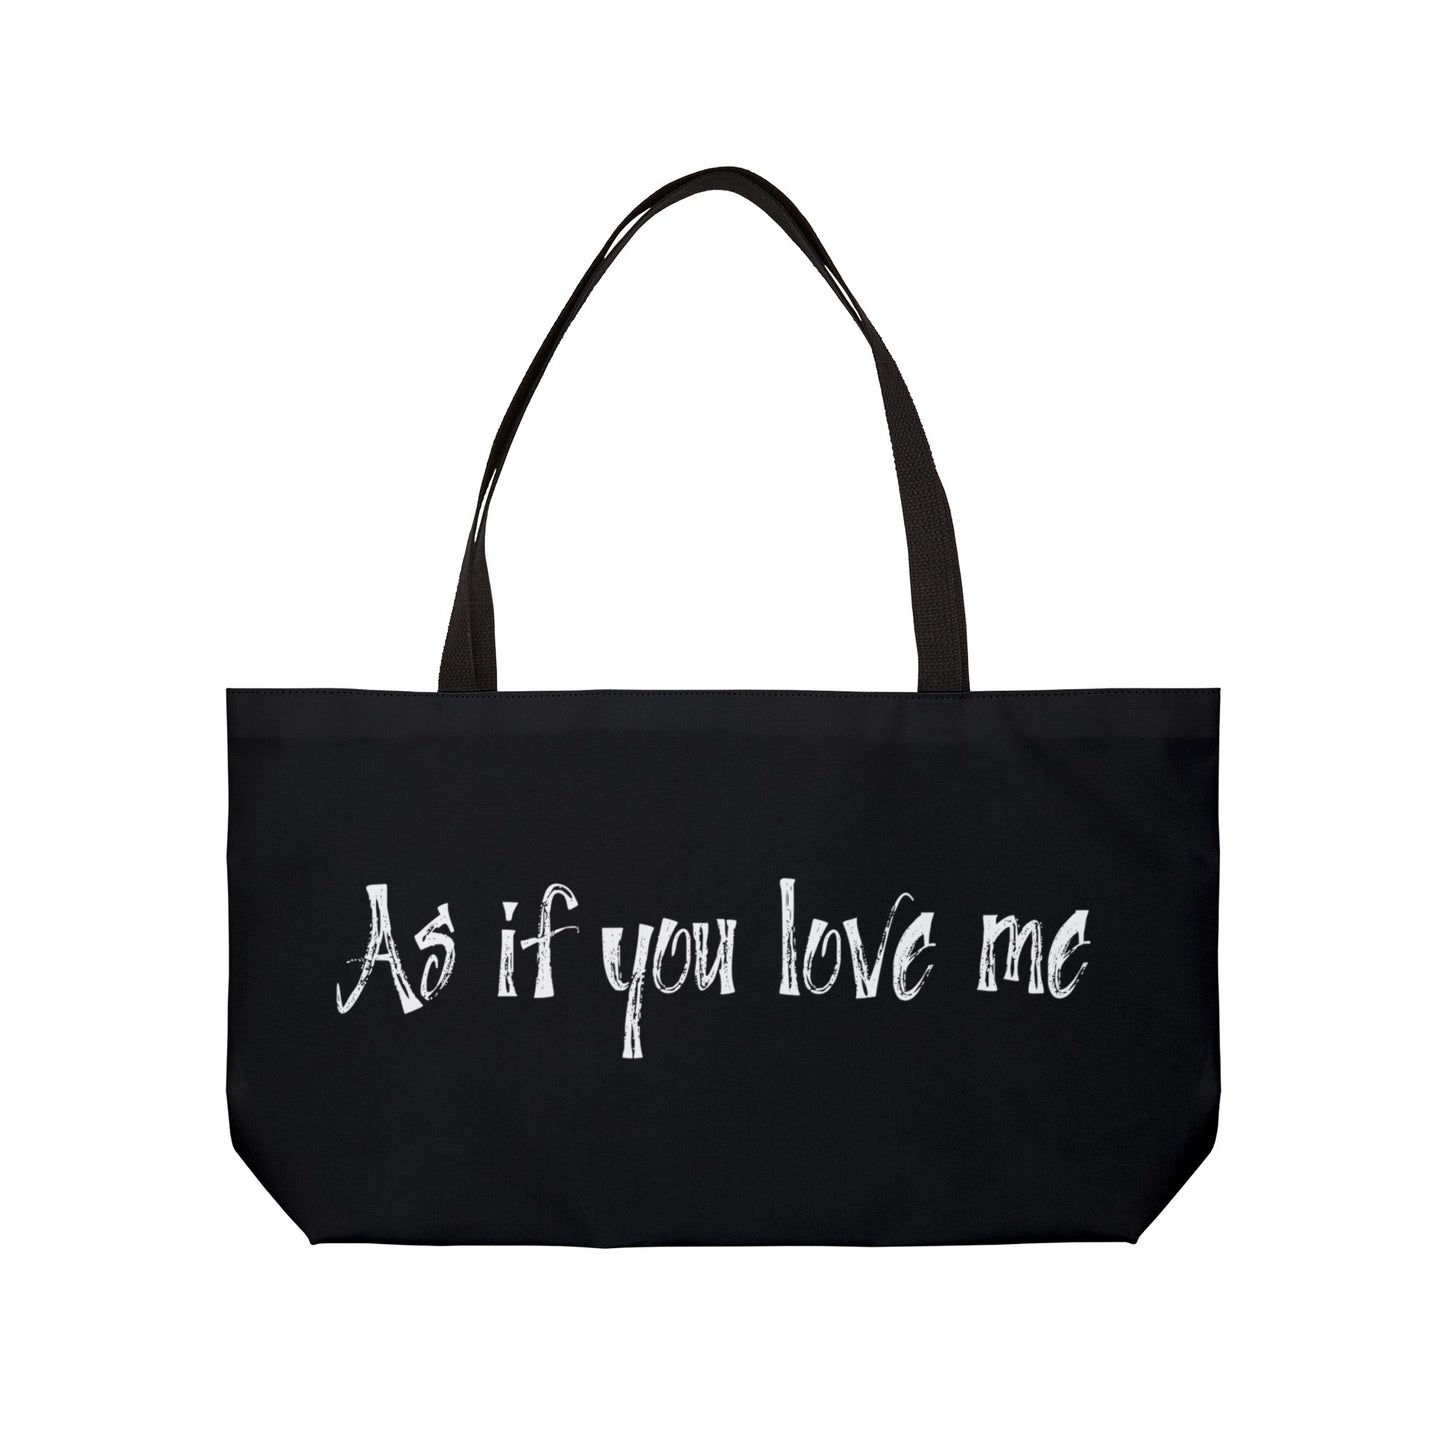 As if you love me Tote Bag